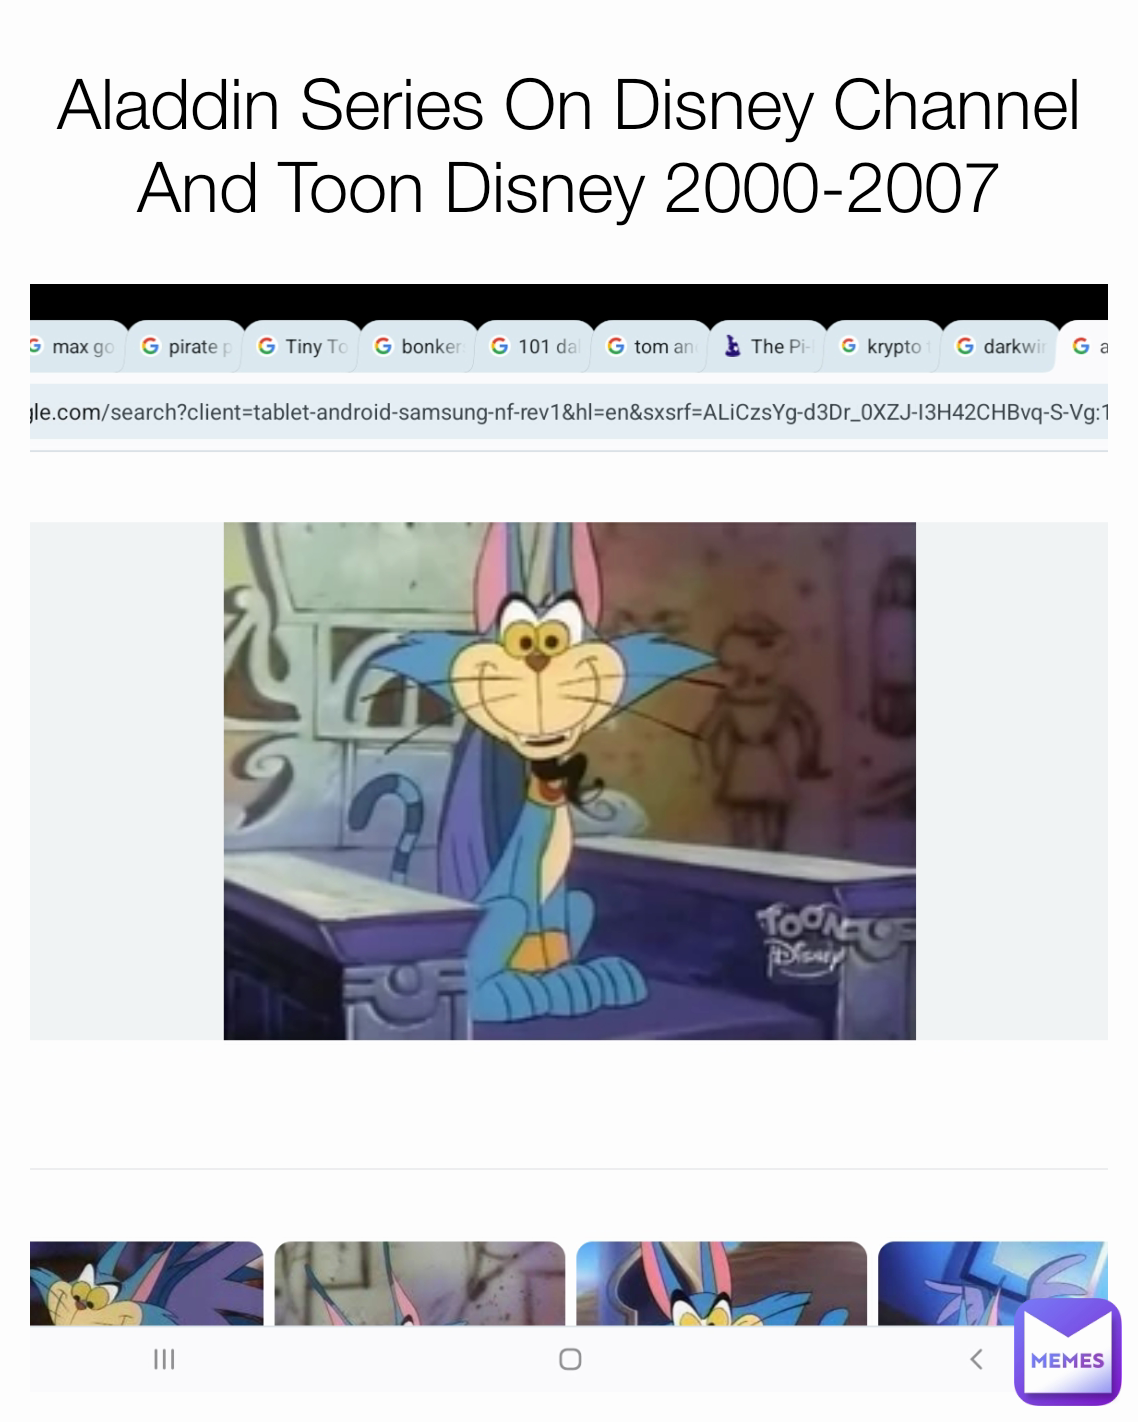 Aladdin Series On Disney Channel And Toon Disney 2000-2007 | @TylerB2003 |  Memes